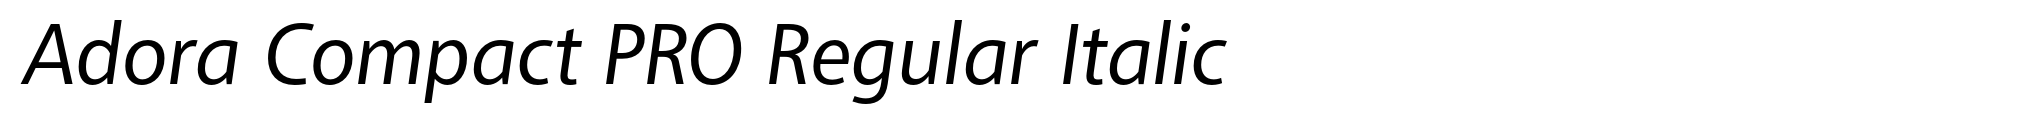 Adora Compact PRO Regular Italic image